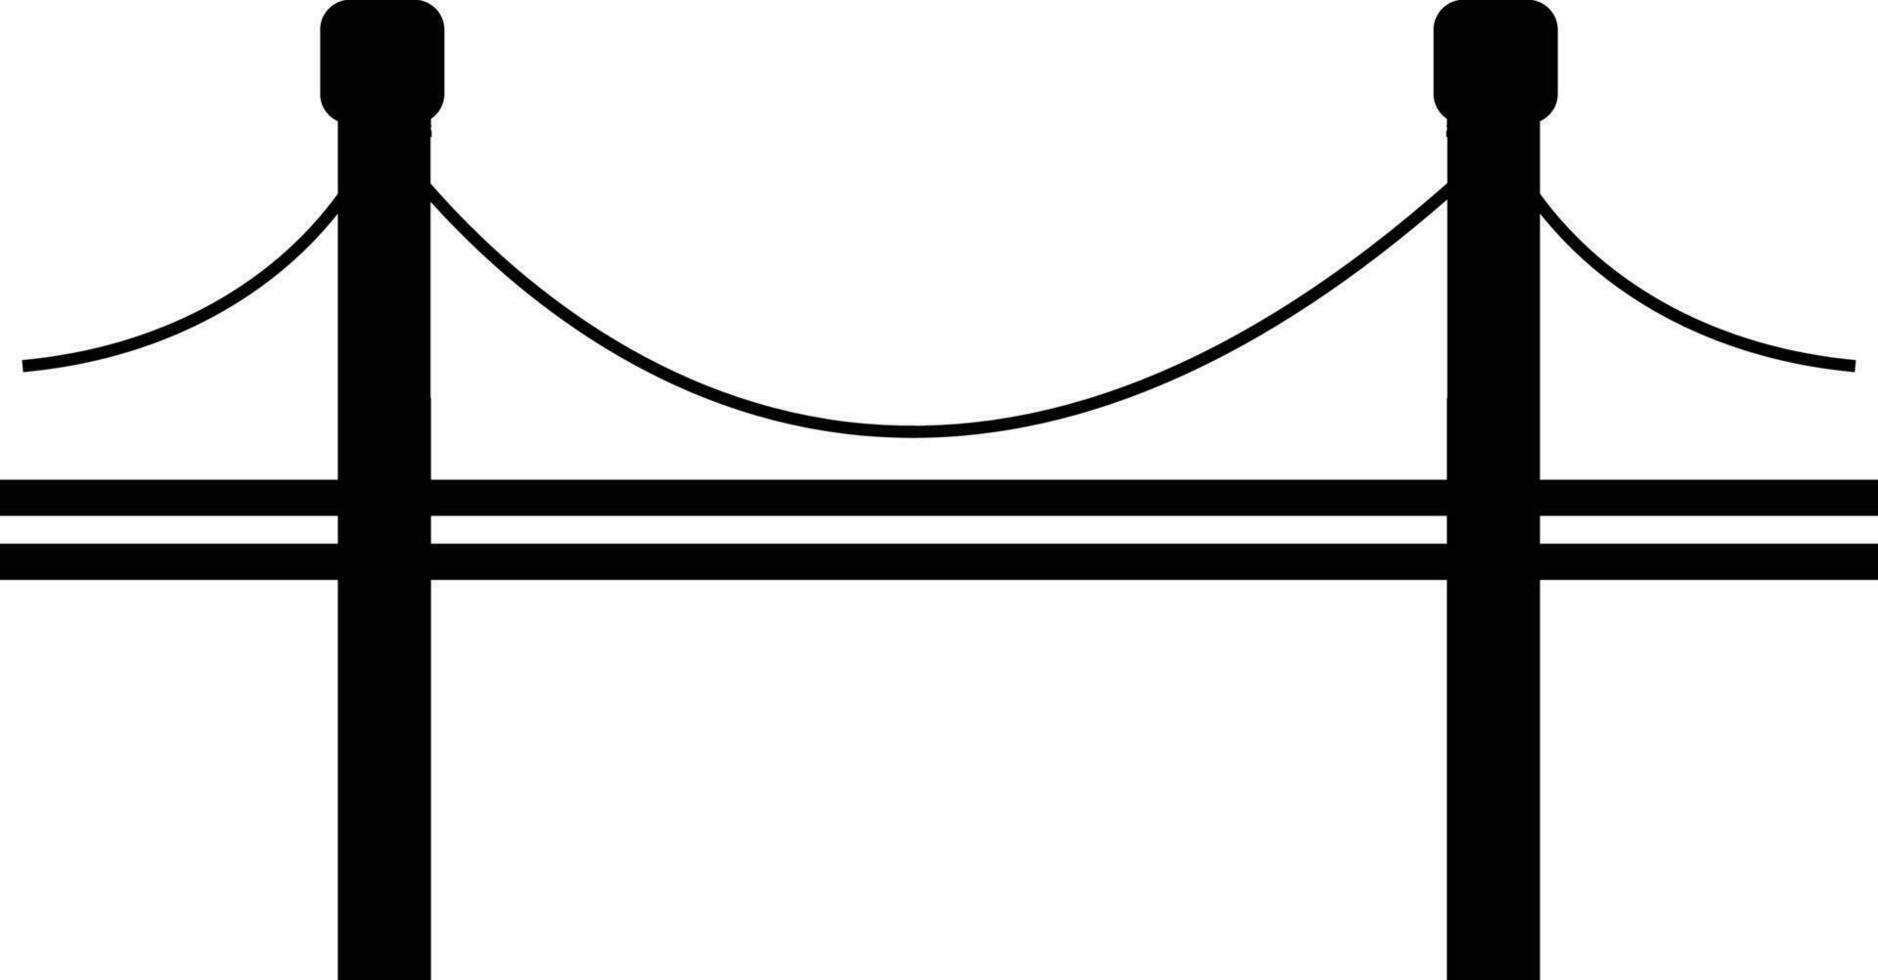 Modern design pattern of bridge in balck color. vector